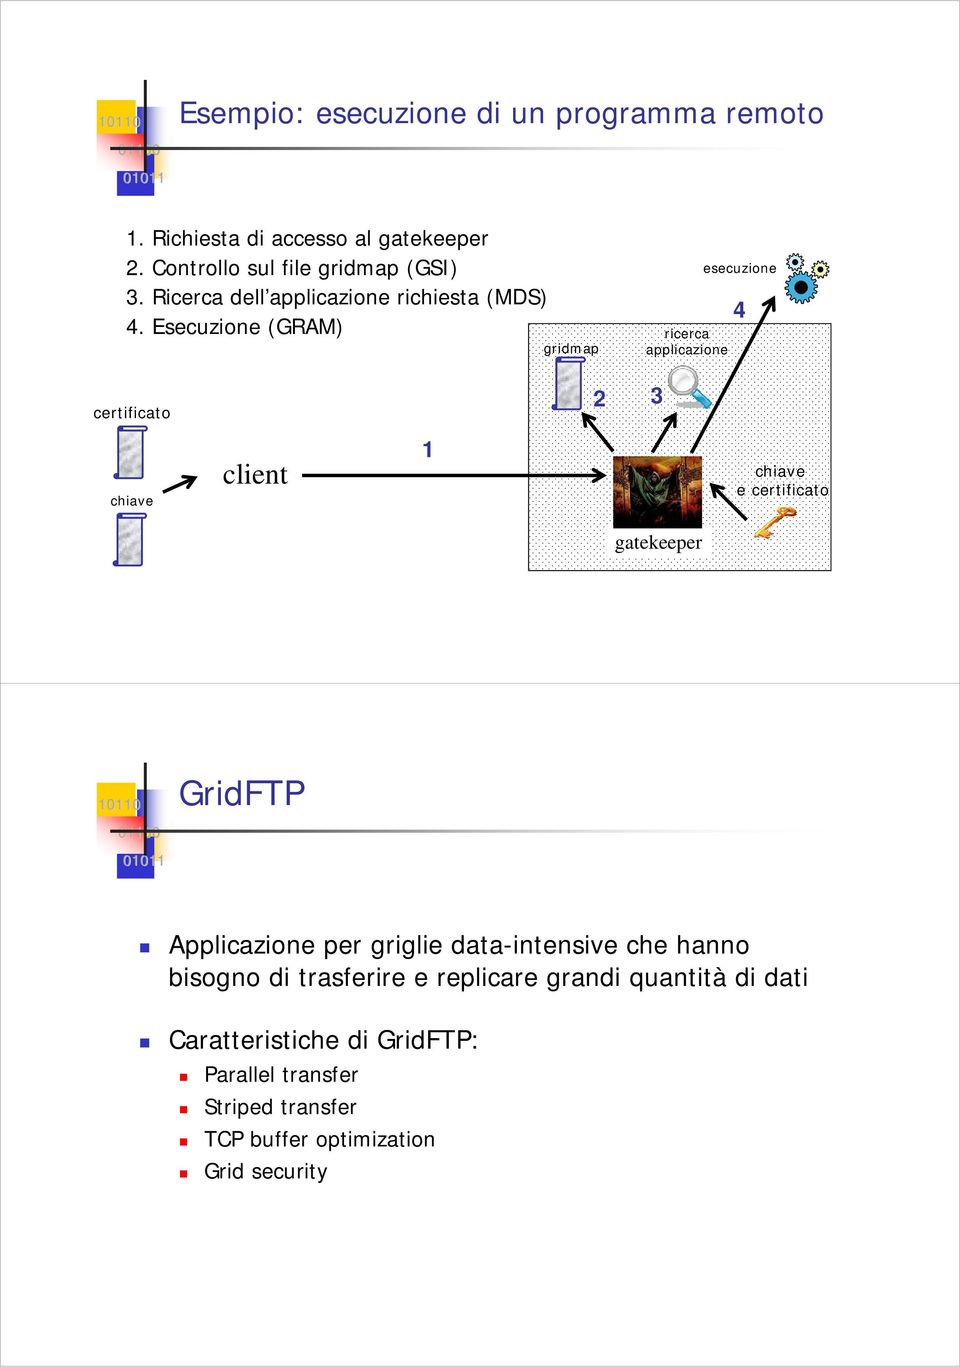 Esecuzione (GRAM) gridmap ricerca applicazione esecuzione 4 certificato 2 3 chiave client 1 chiave e certificato gatekeeper